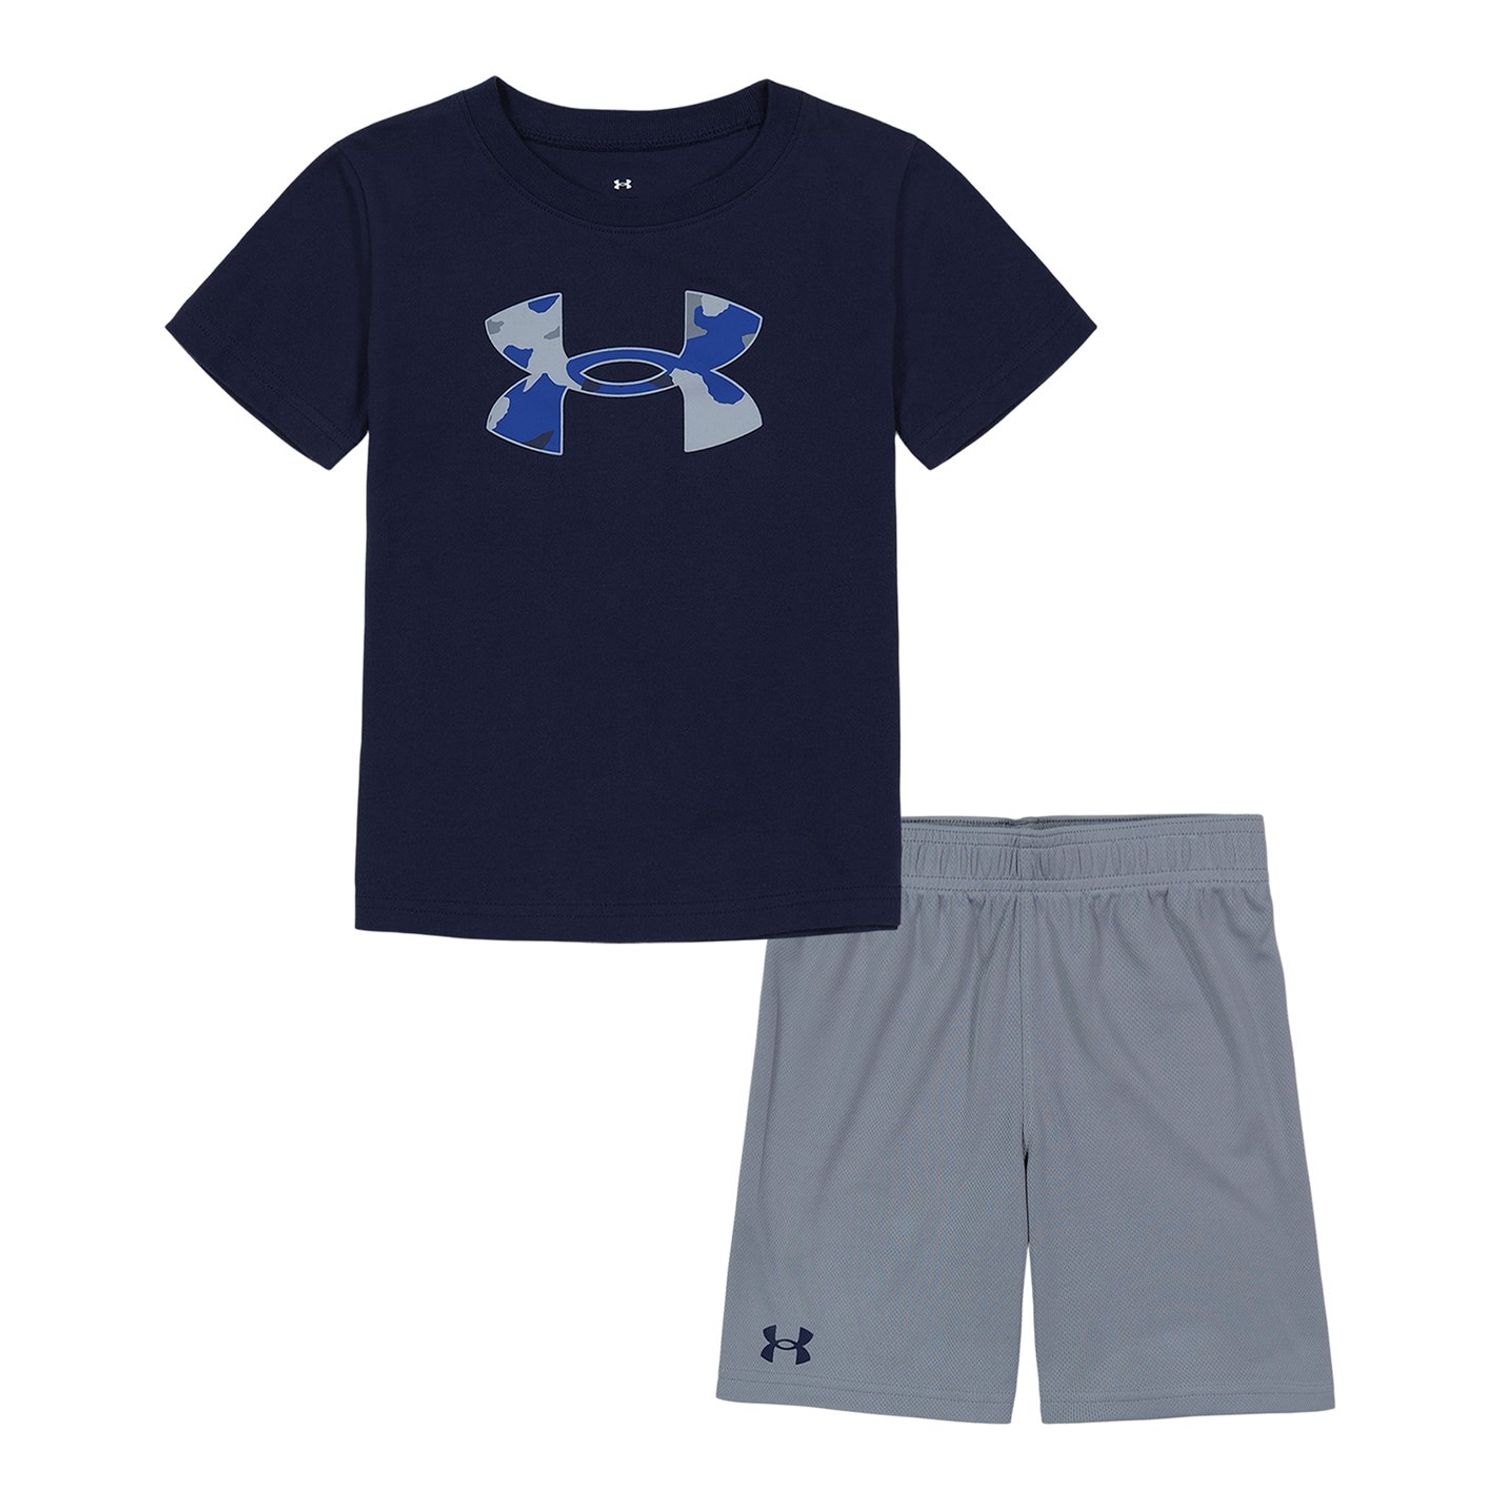 Under Armour Boys' Toddler Deep Sea Wordmark Short Sleeve & Shorts Set - Blue, 2T